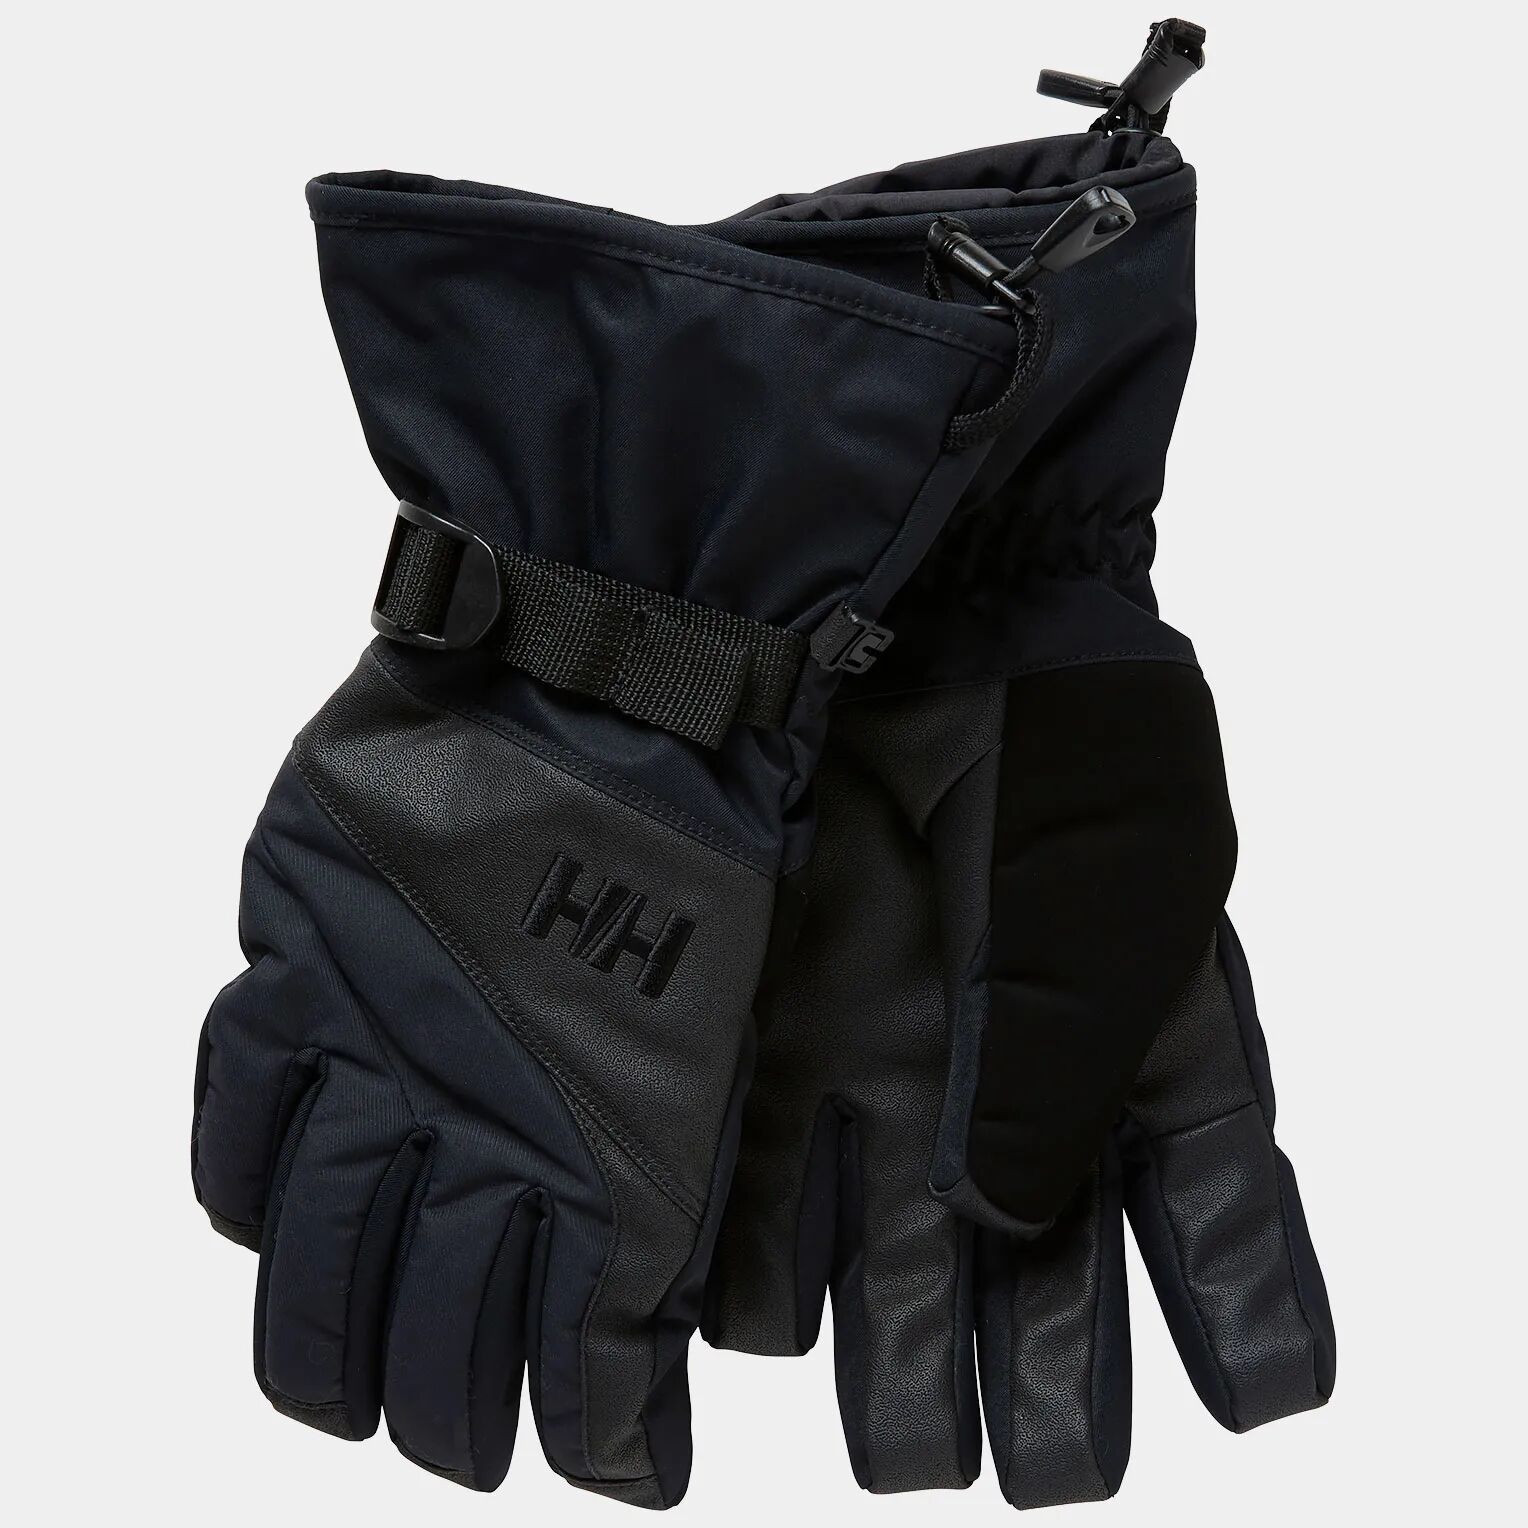 Helly Hansen Women's Freeride Waterproof Ski Gloves Black S